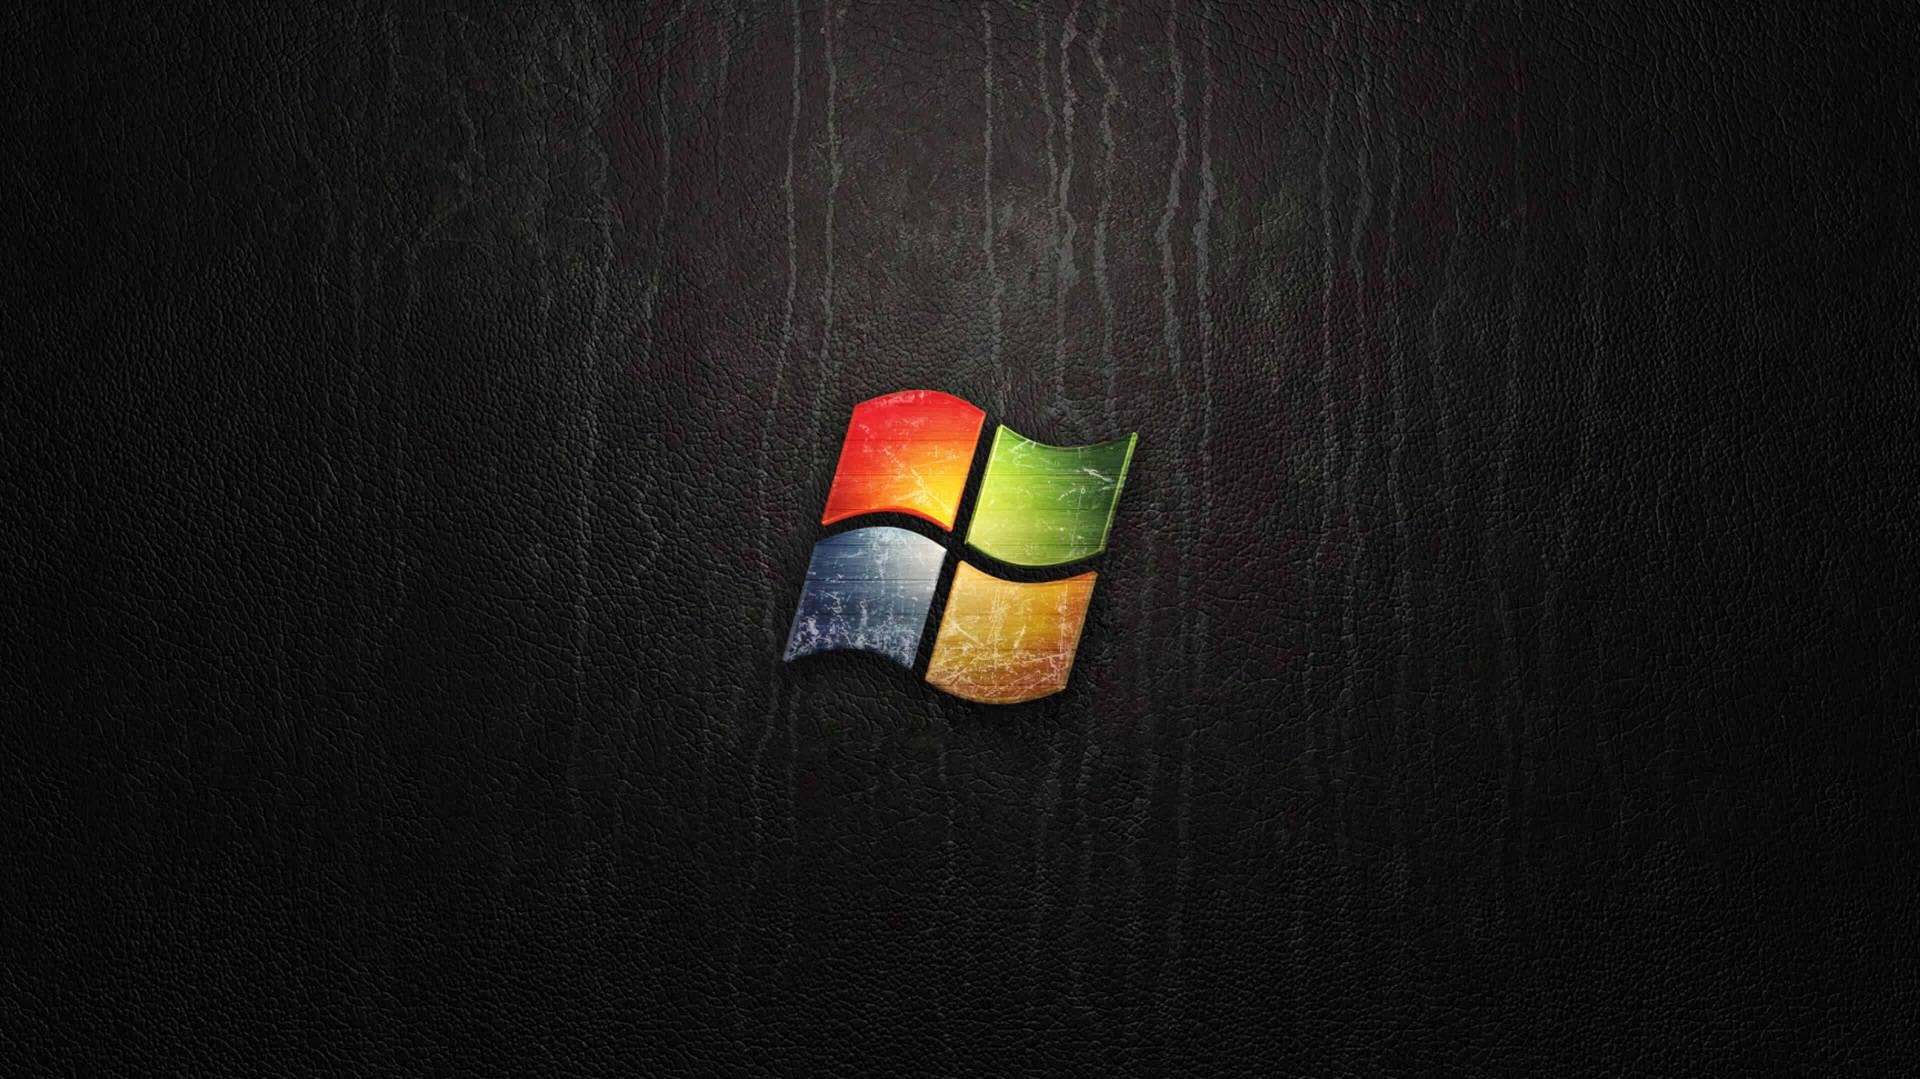 Microsoft Wallpaper